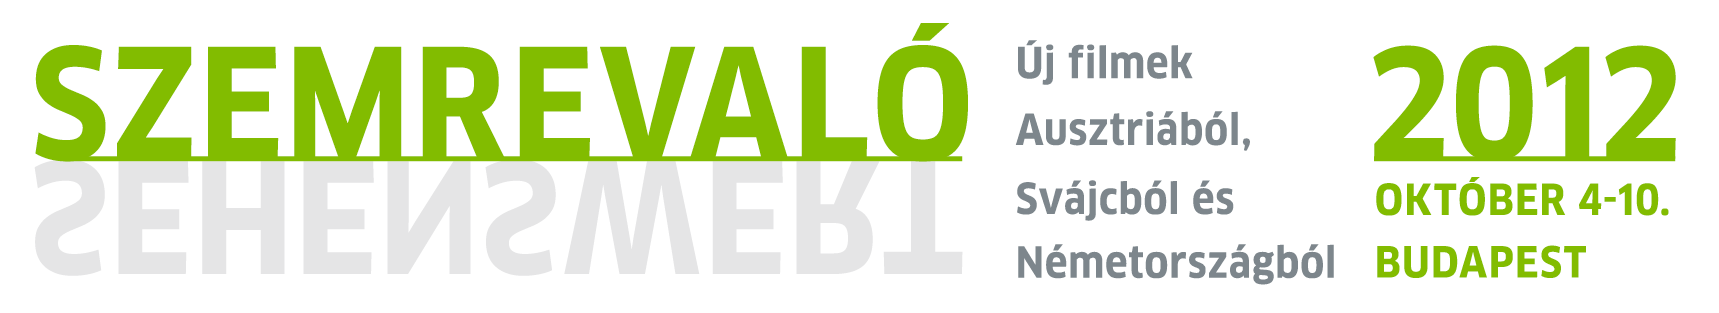 szemrevalo_logo